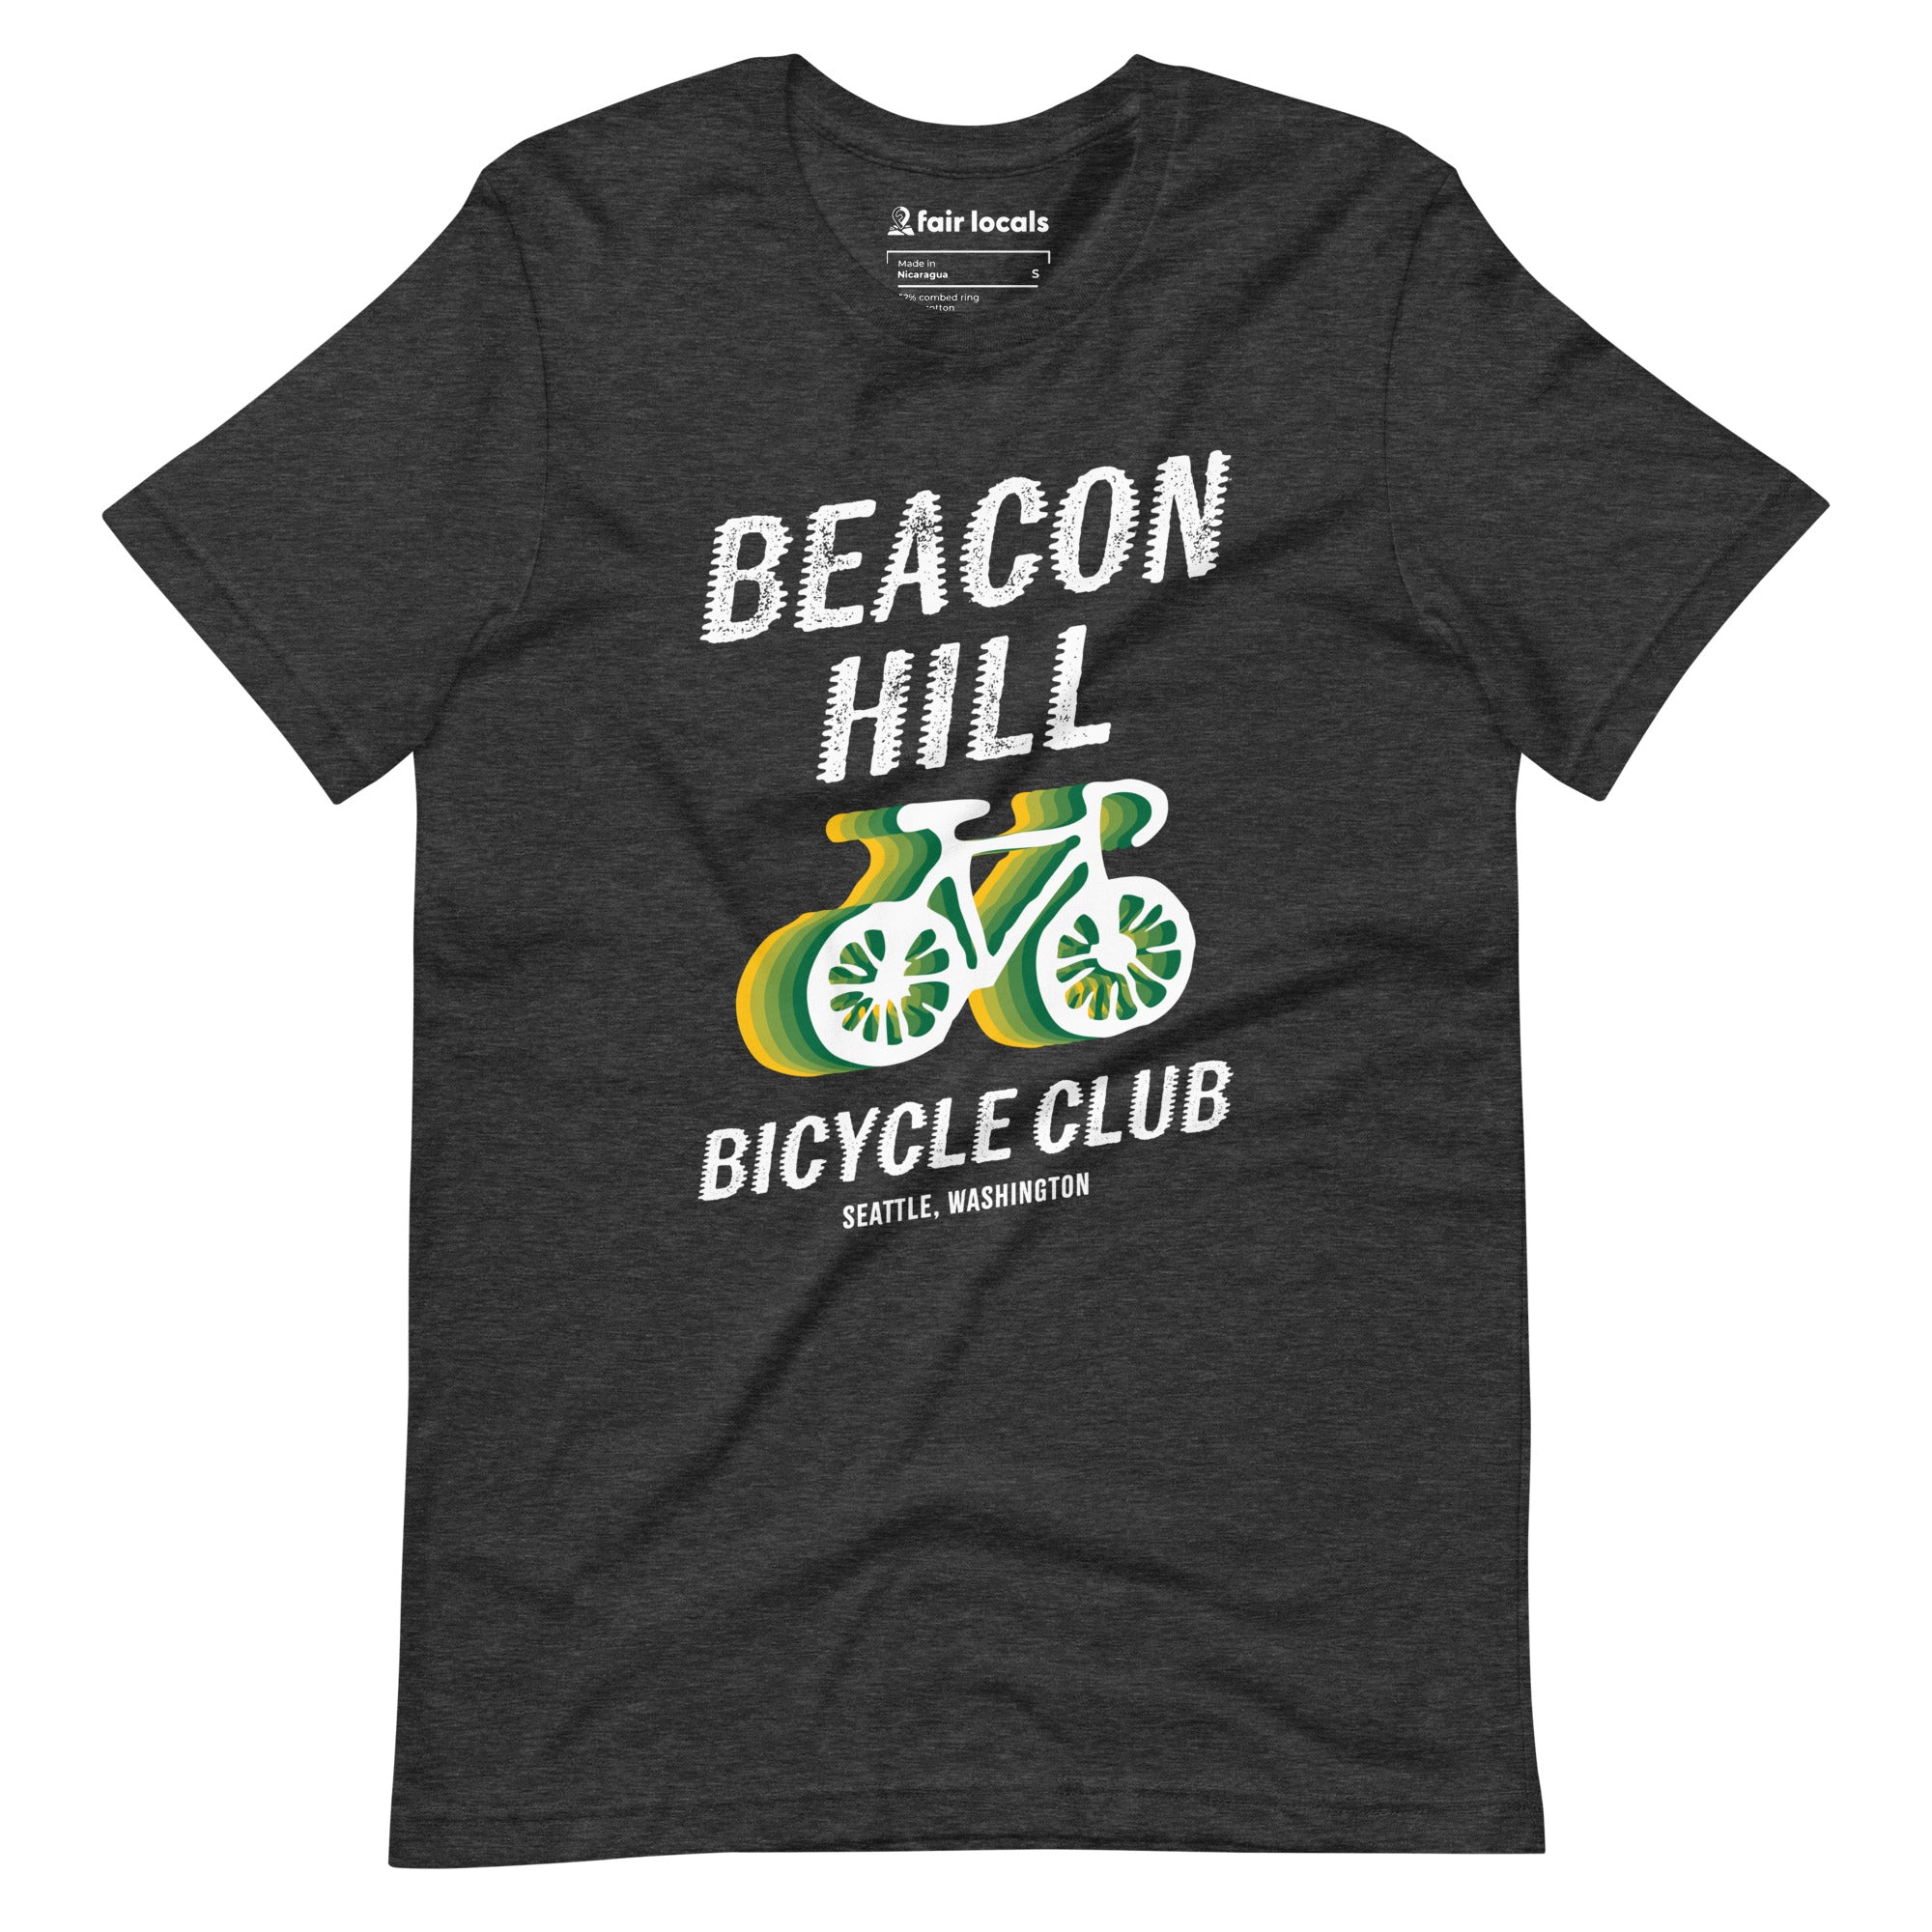 Bicycle Club T-Shirt - Beacon Hill | Seattle, WA